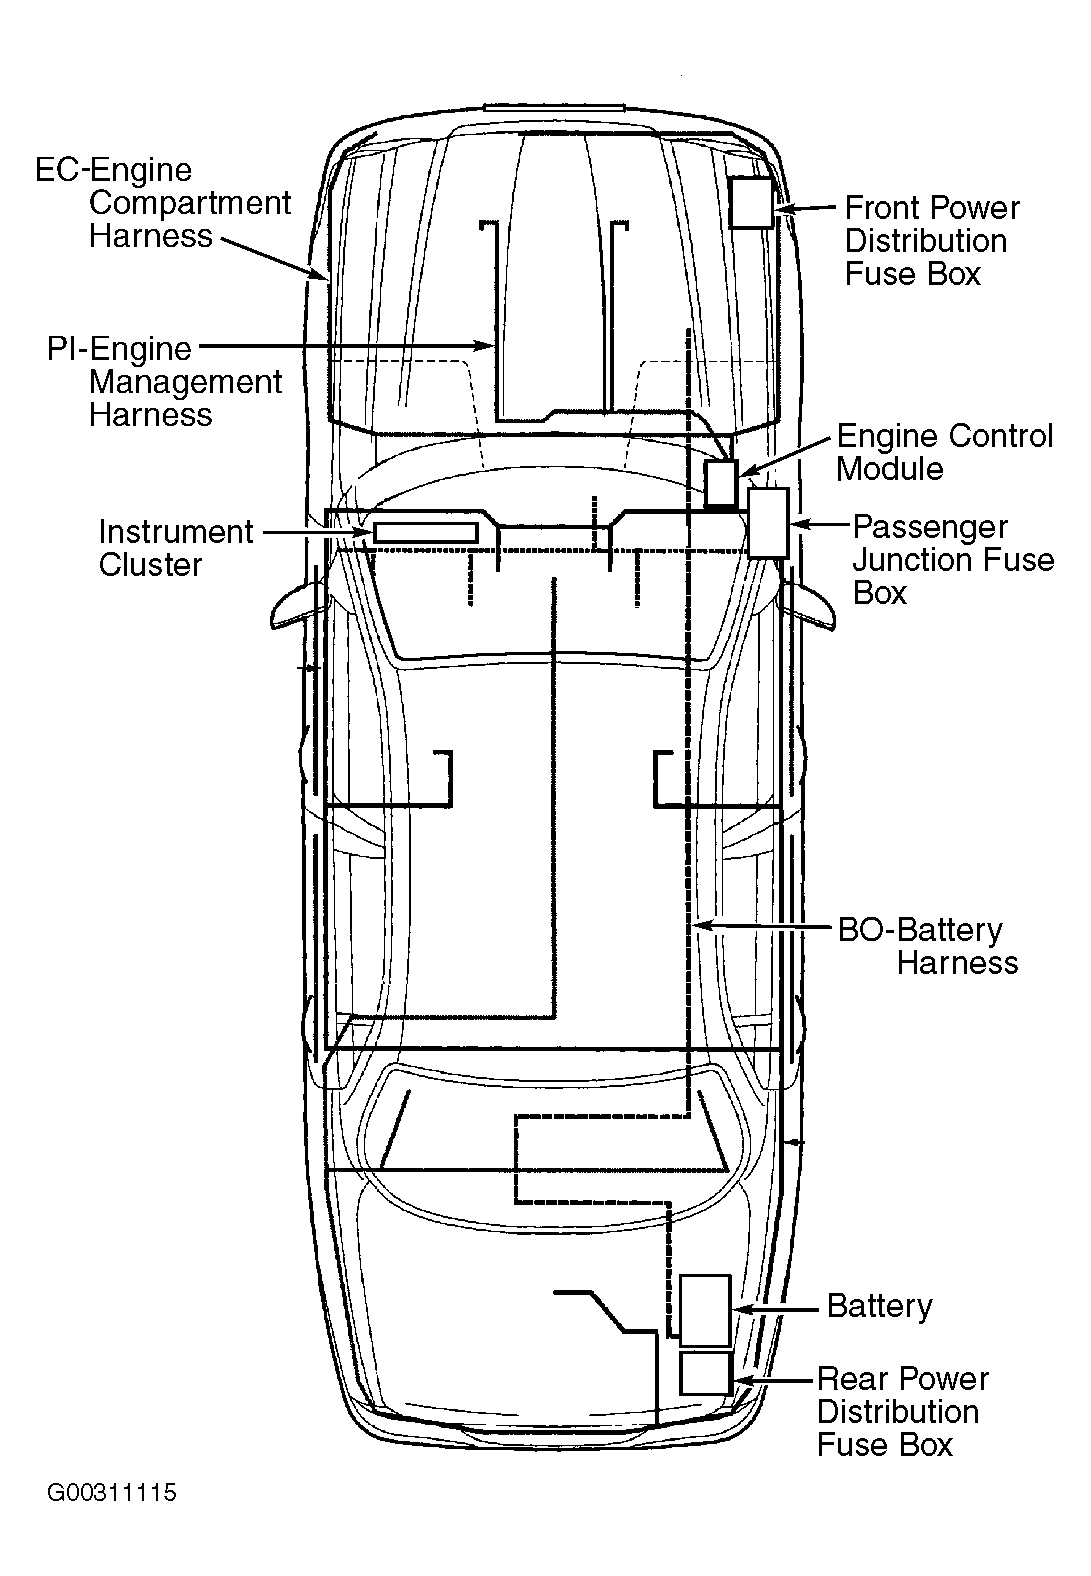 Jaguar XJ8 2004 - Component Locations -  Identifying Front Power Distribution Fuse Box Location